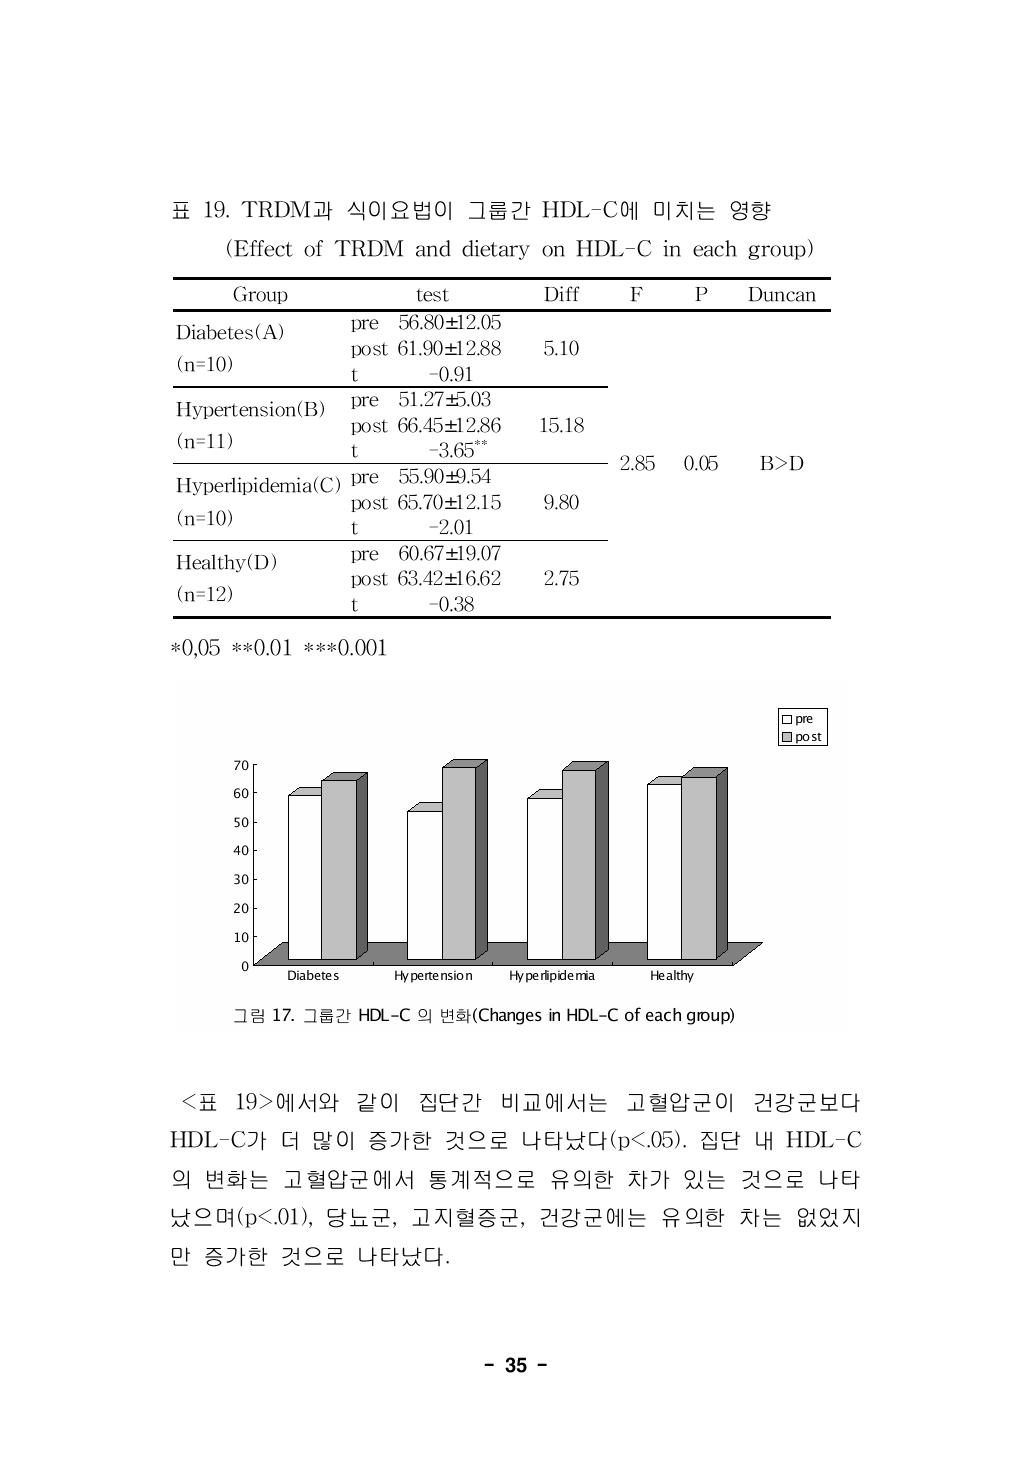 TRDM과 식이요법이 그룹간 HDL-C에 미치는 영향(Effect of TRDM and dietary on HDL-C in each group)